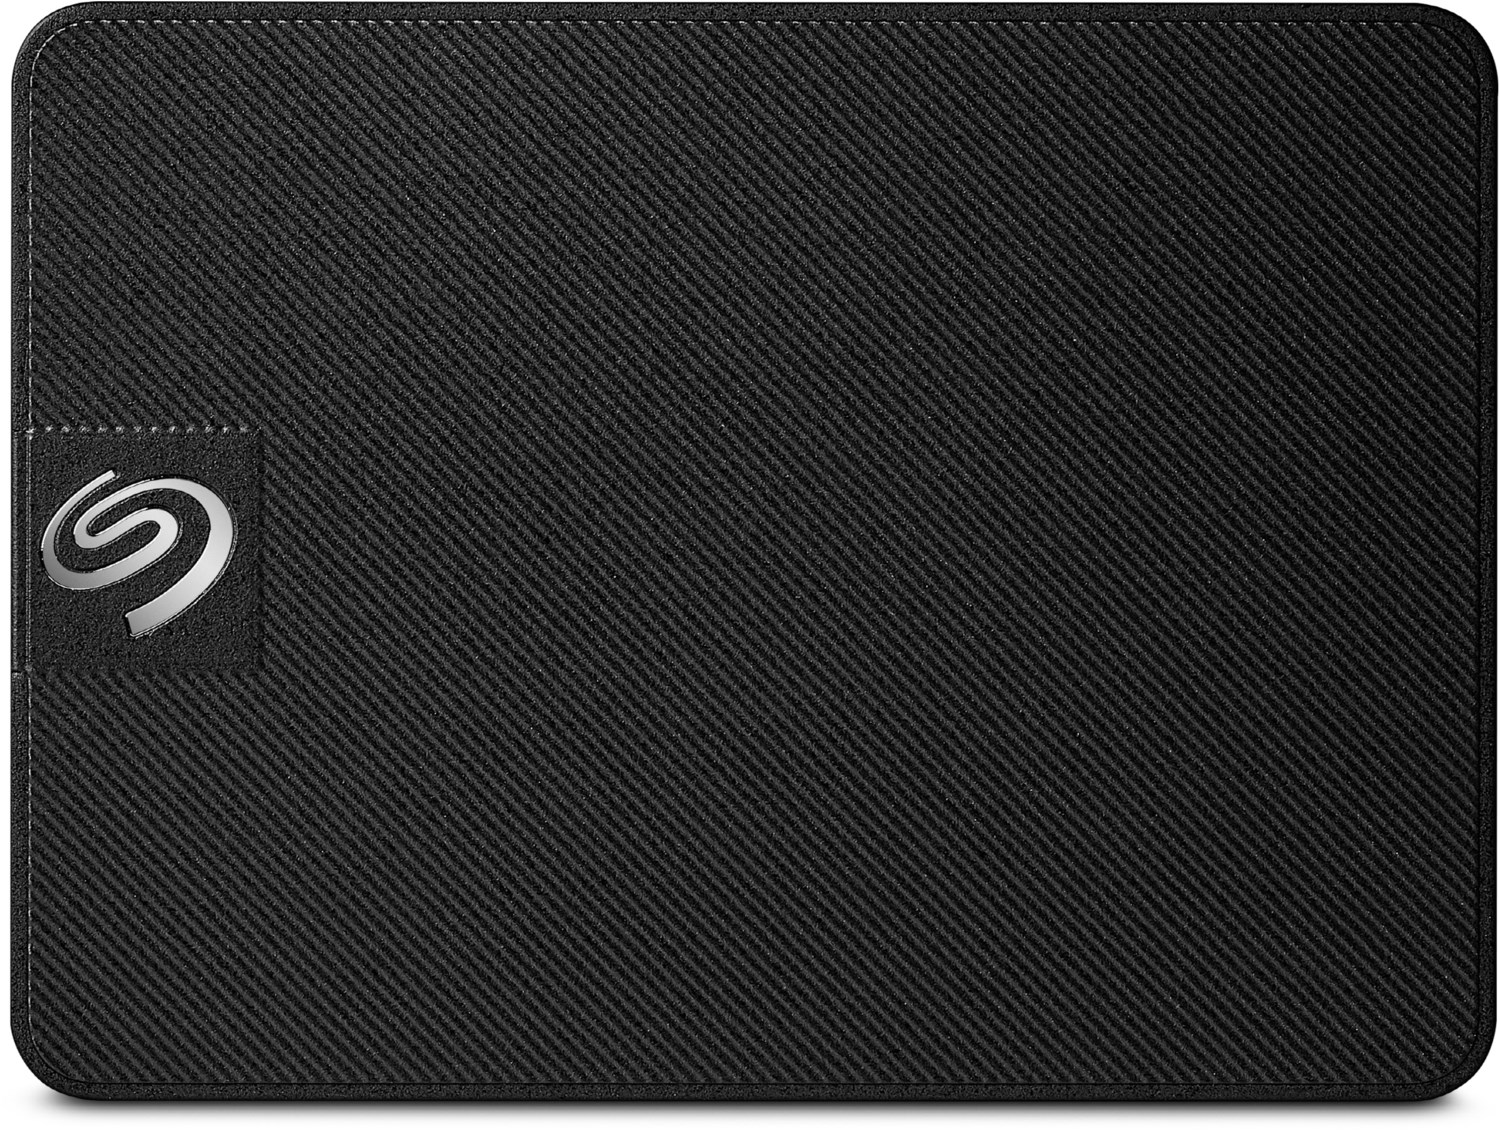 Expansion USB 3.0 (500GB) Externe SSD schwarz